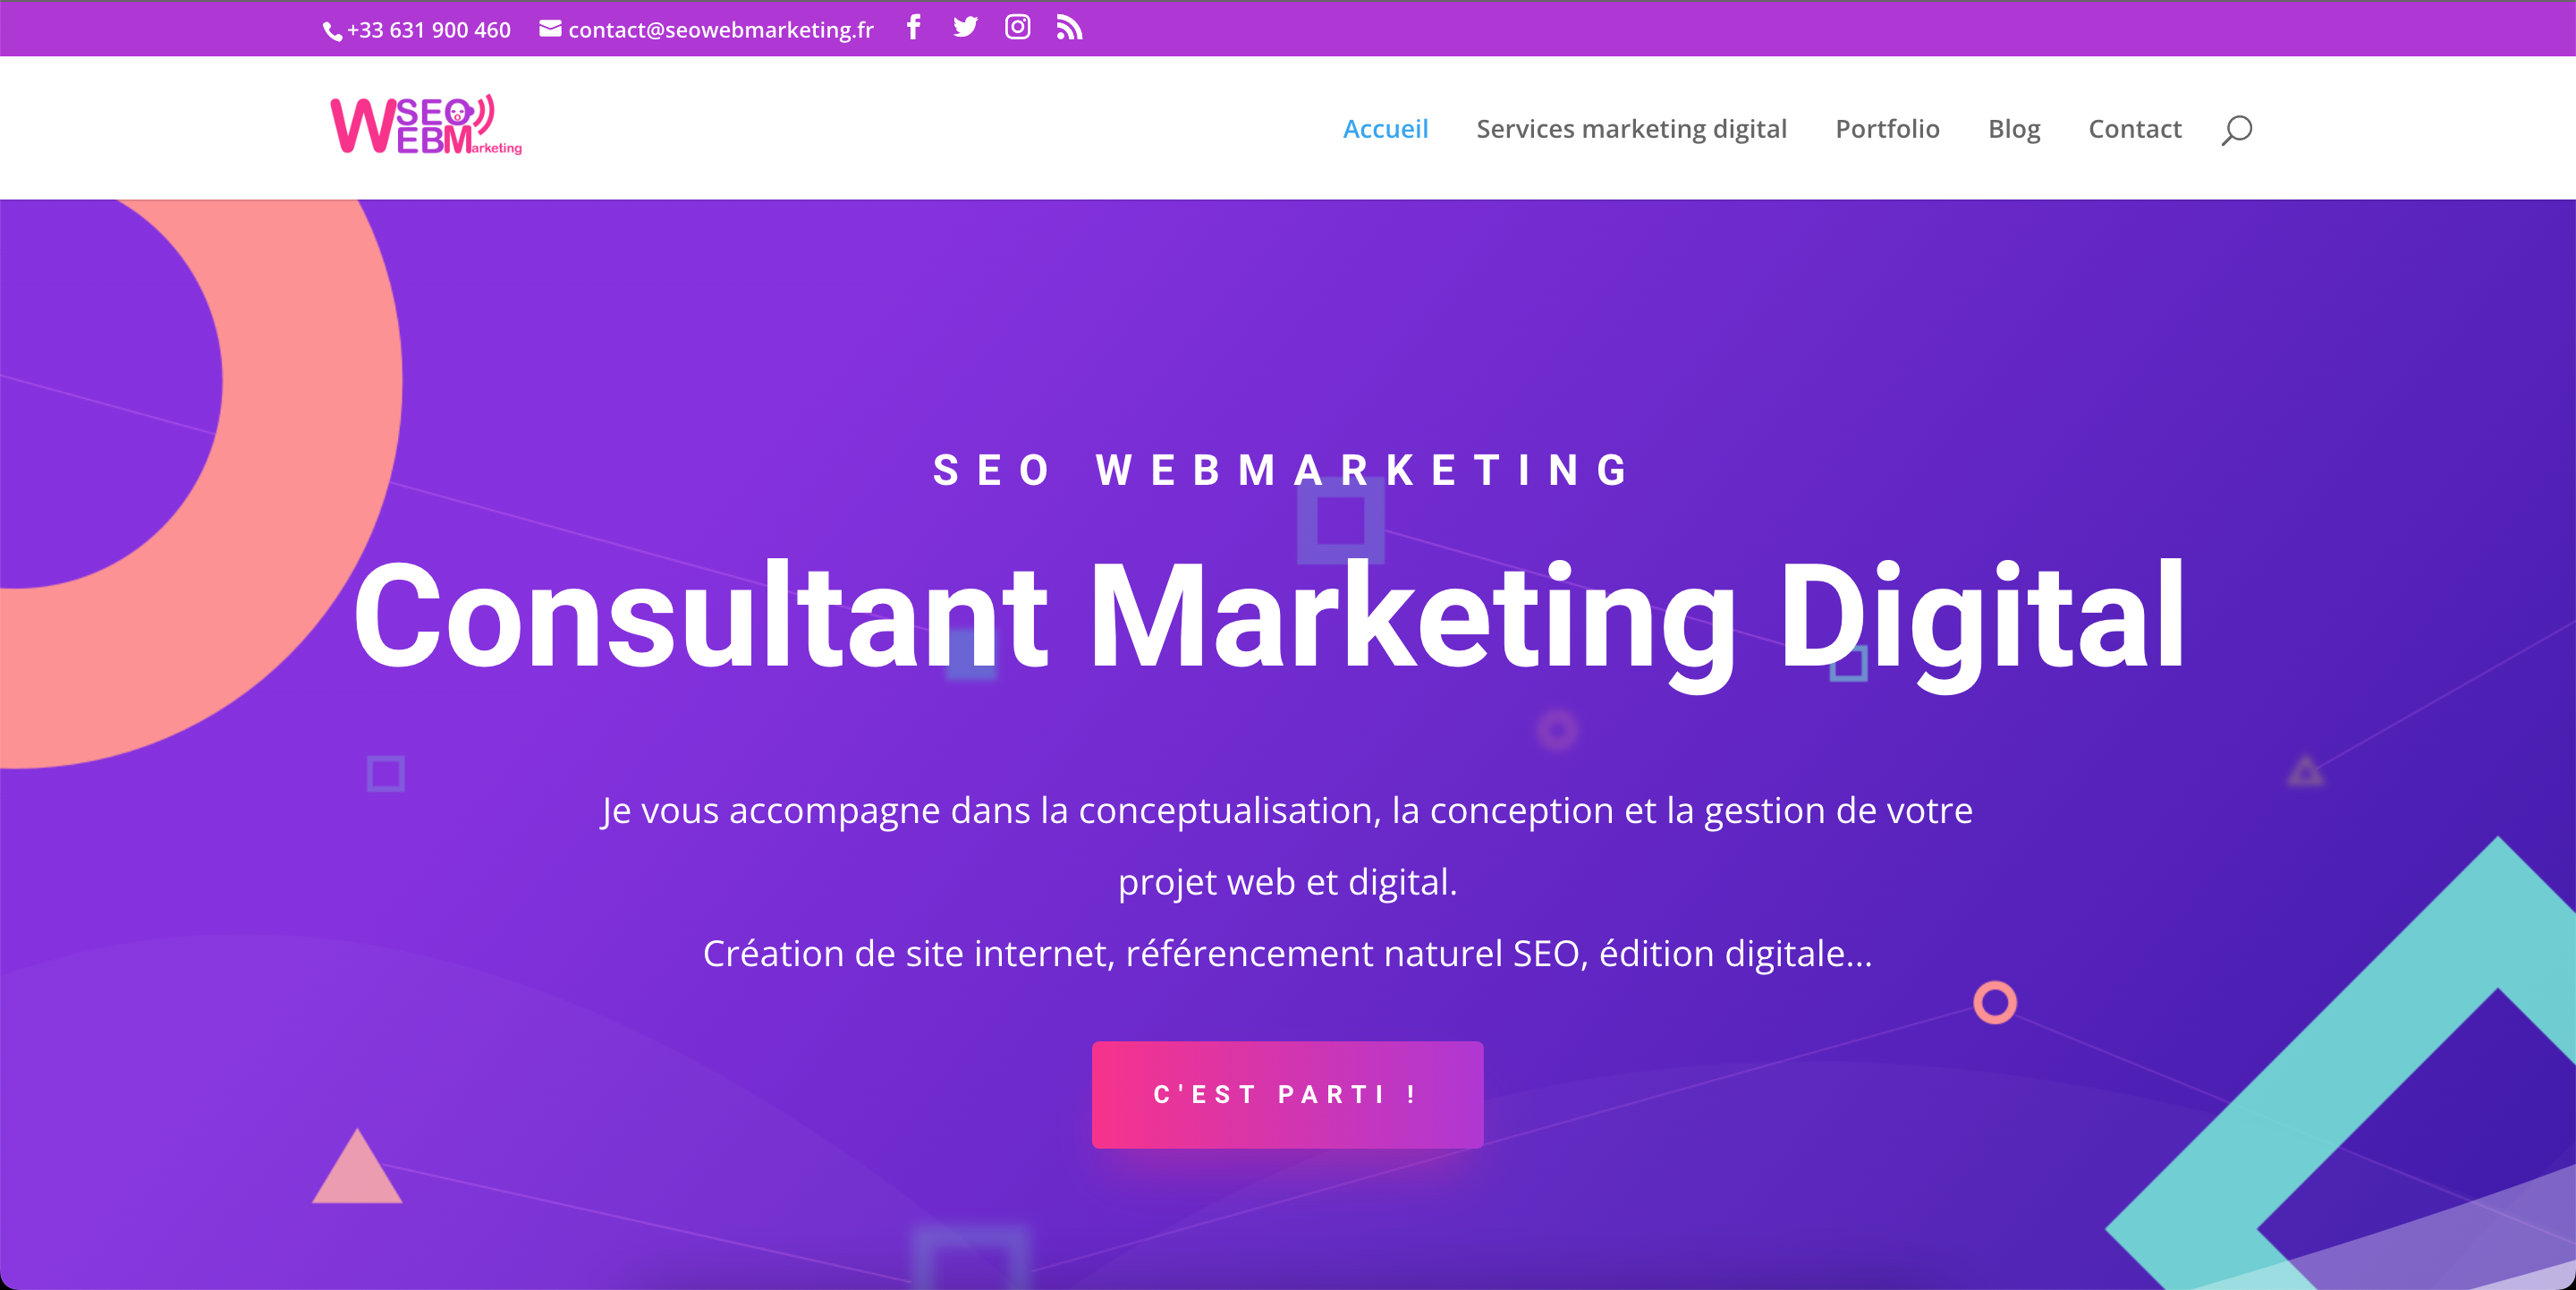 SEO Webmarketing, consultant en marketing digital